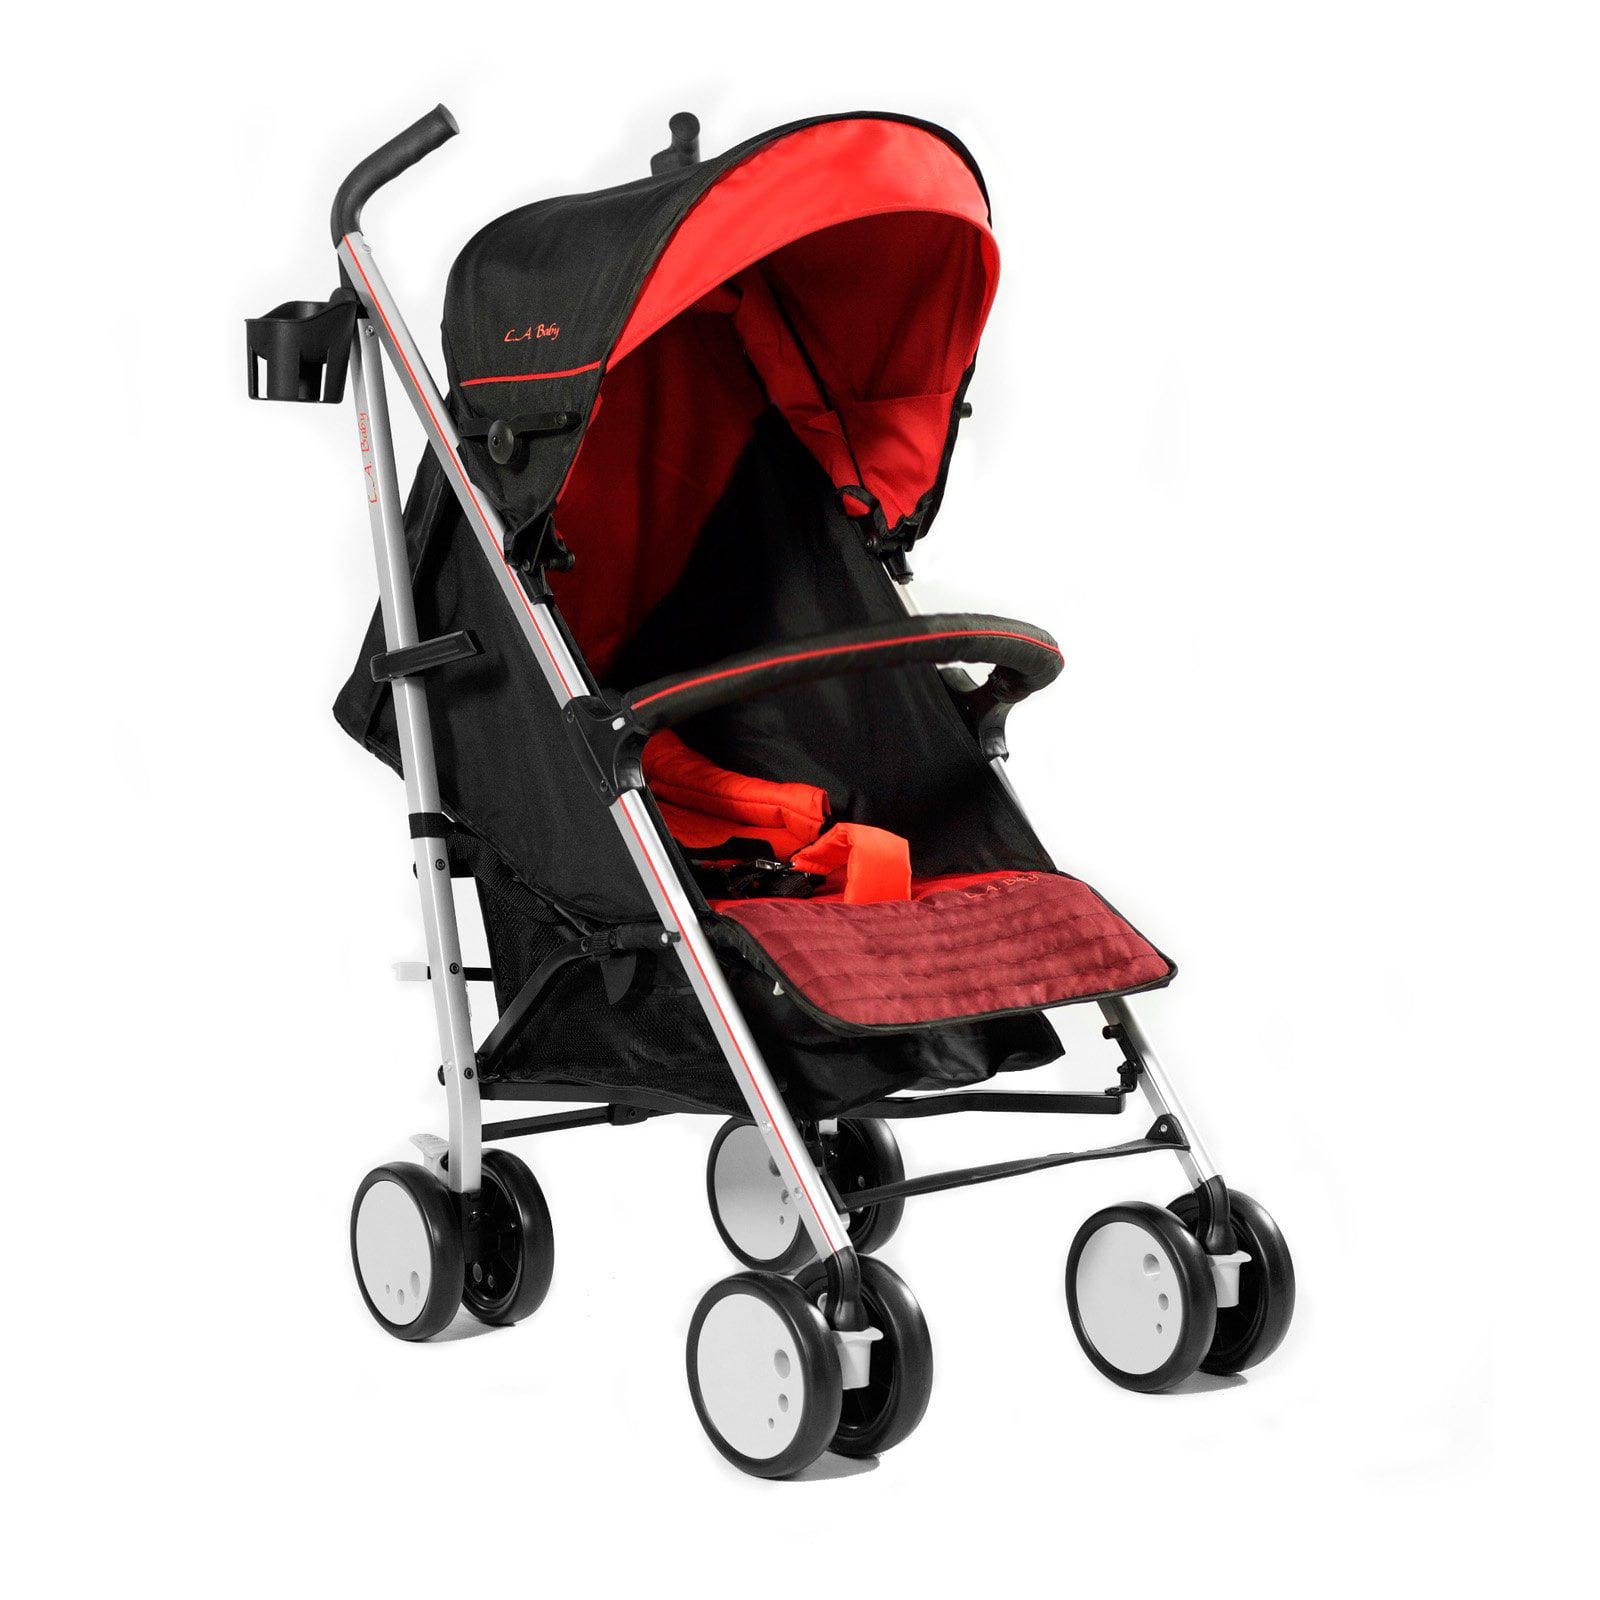 l.a. baby sherman blvd stroller - black/red - Walmart.com - Walmart.com